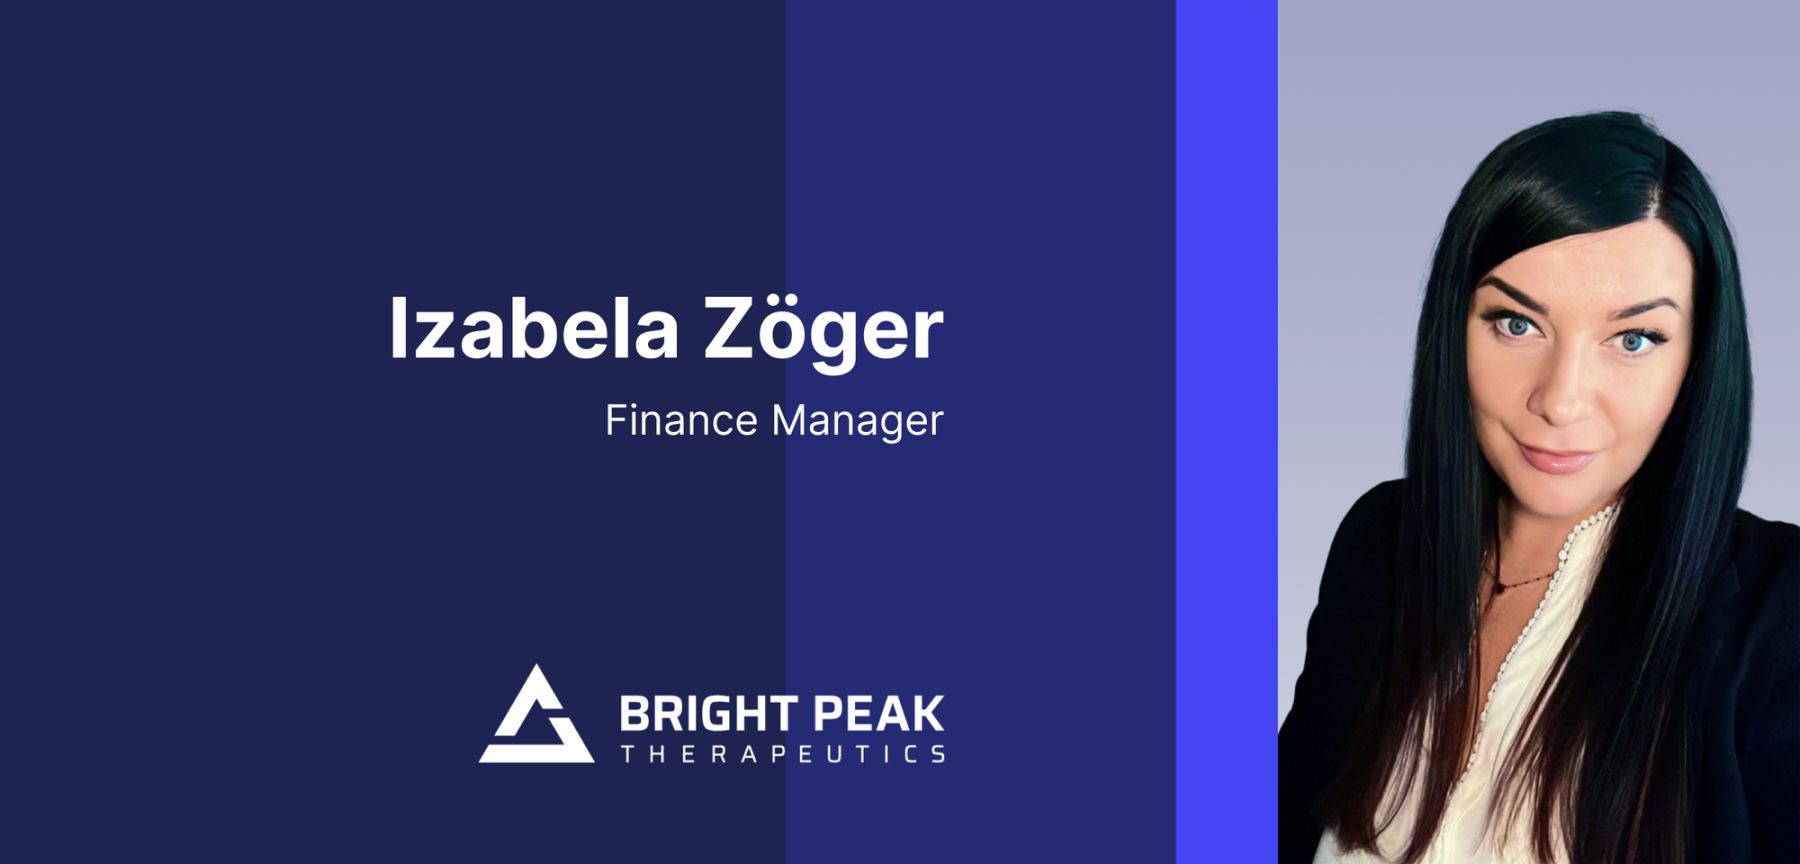 izabela zöger, finance manager at bright peak therapeutics